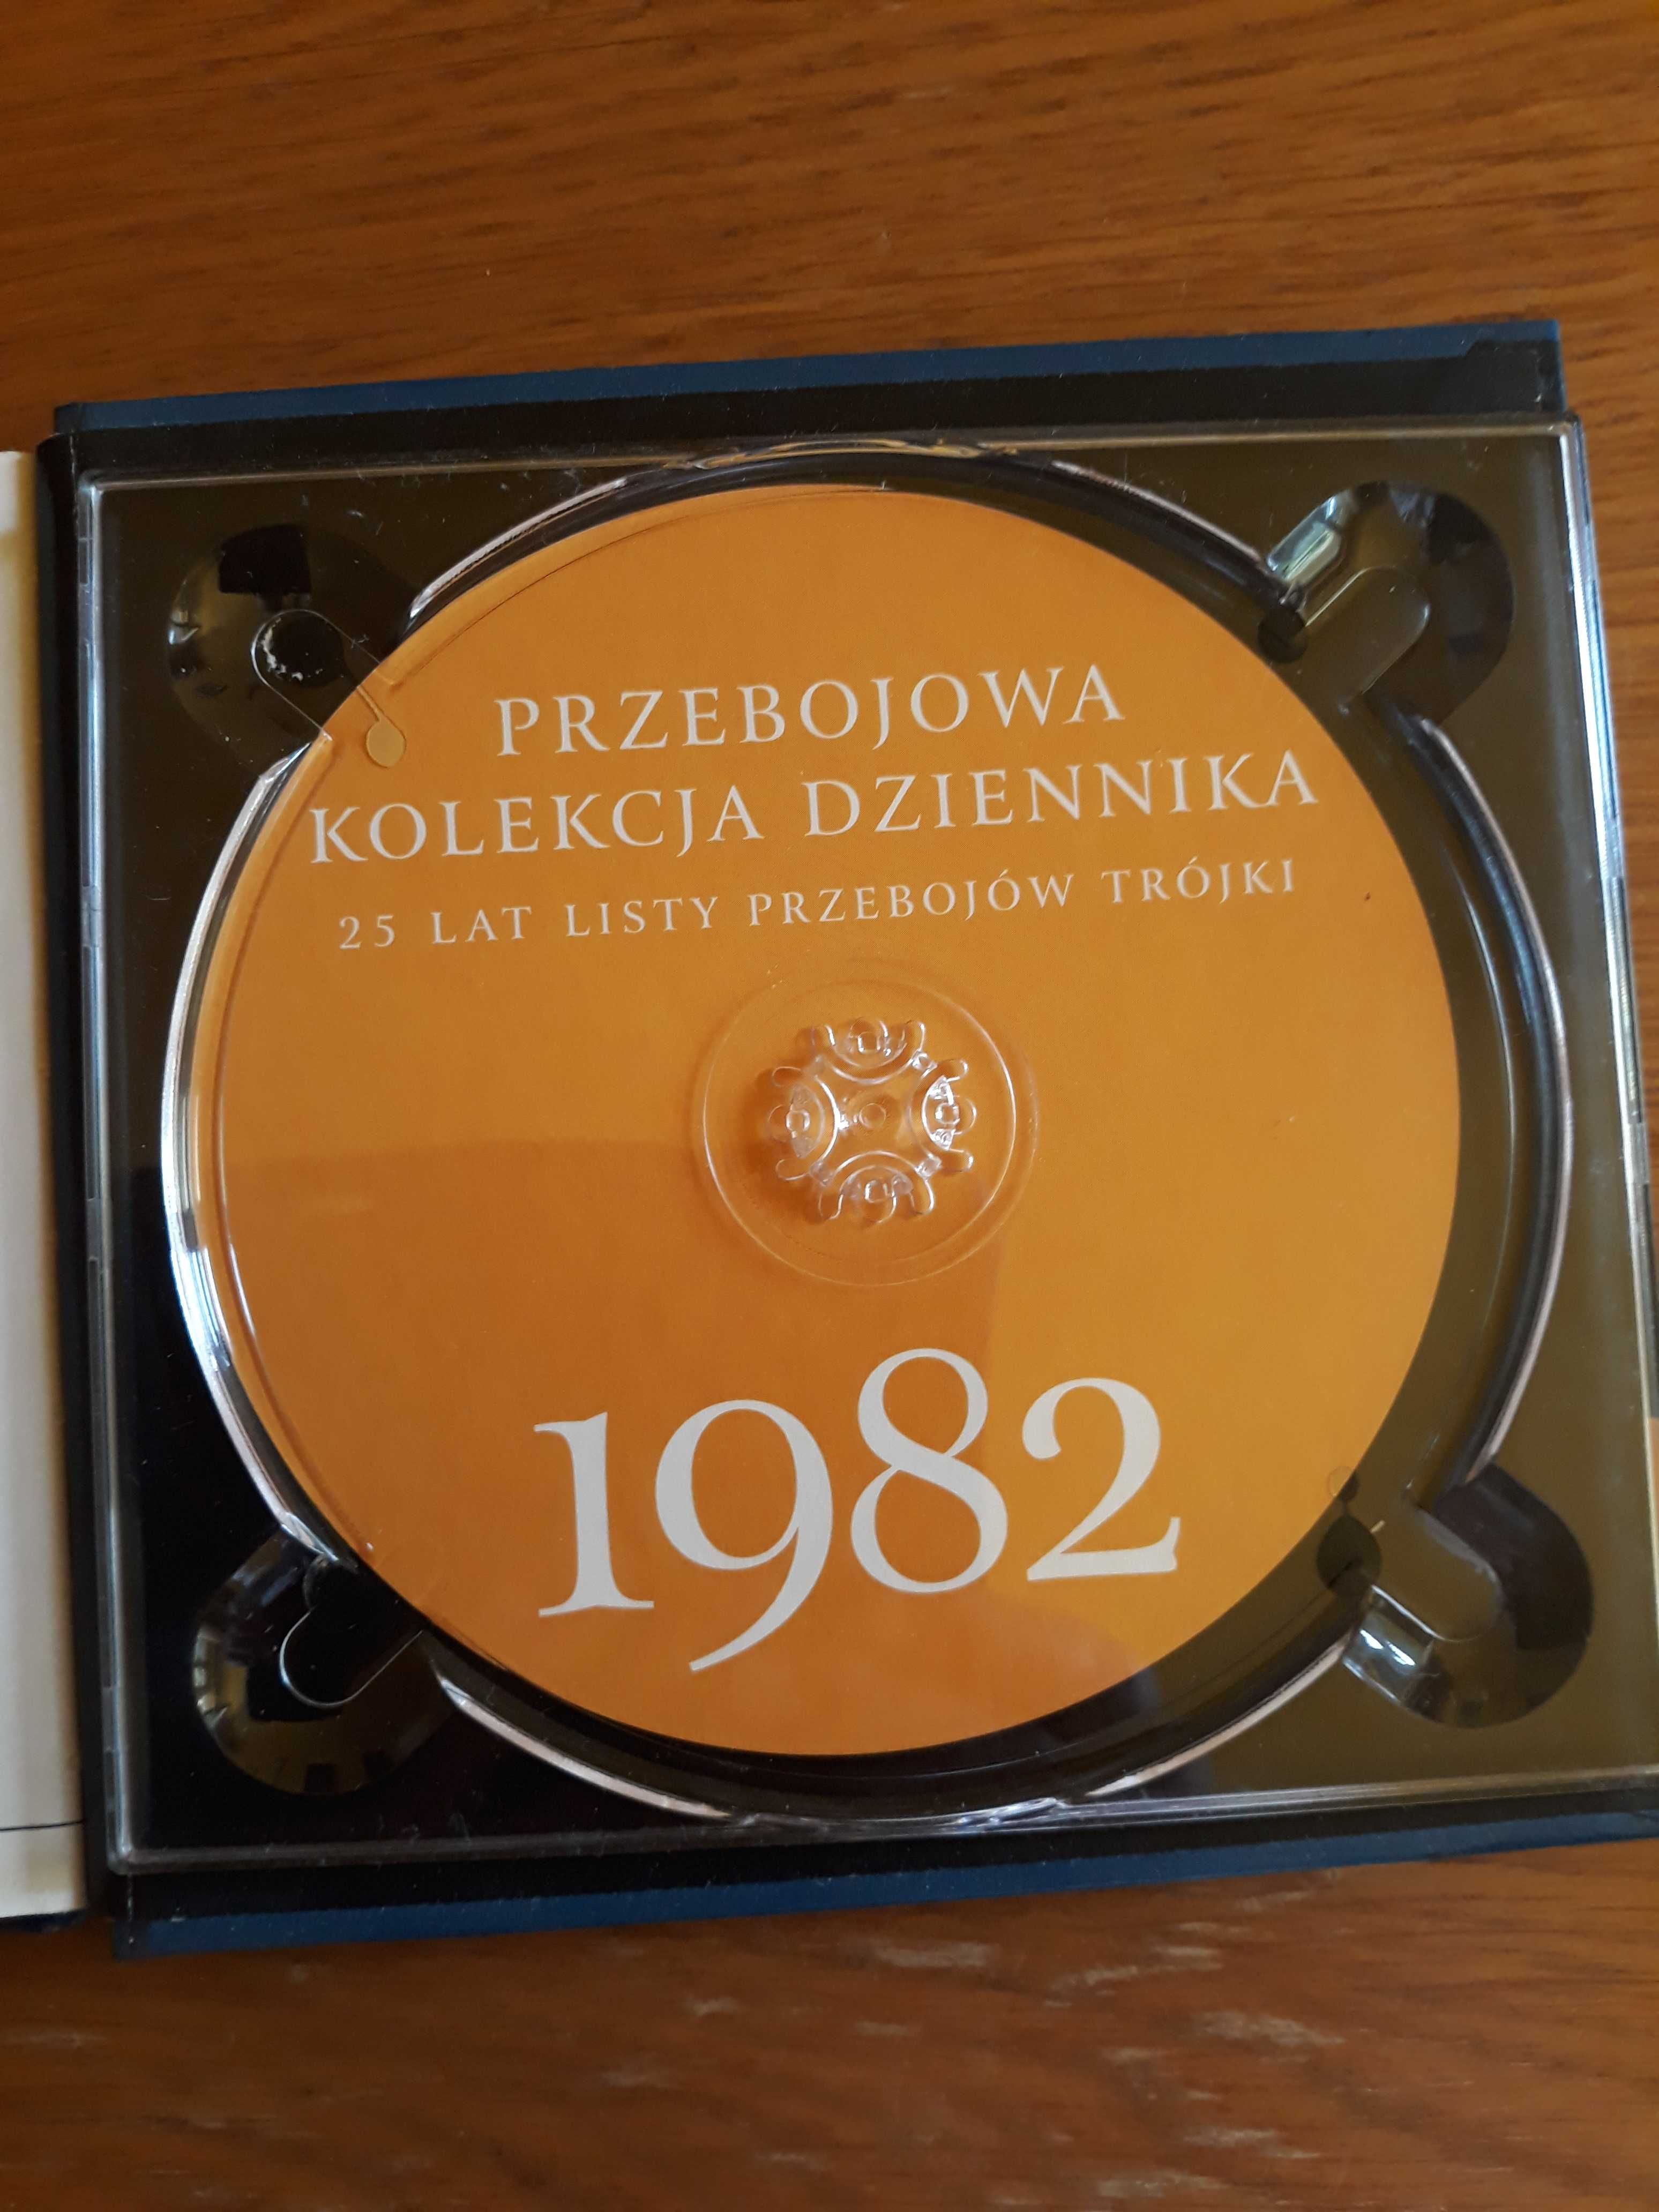 Płytki CD, 2 szt,  25 lat przebojów trójki.